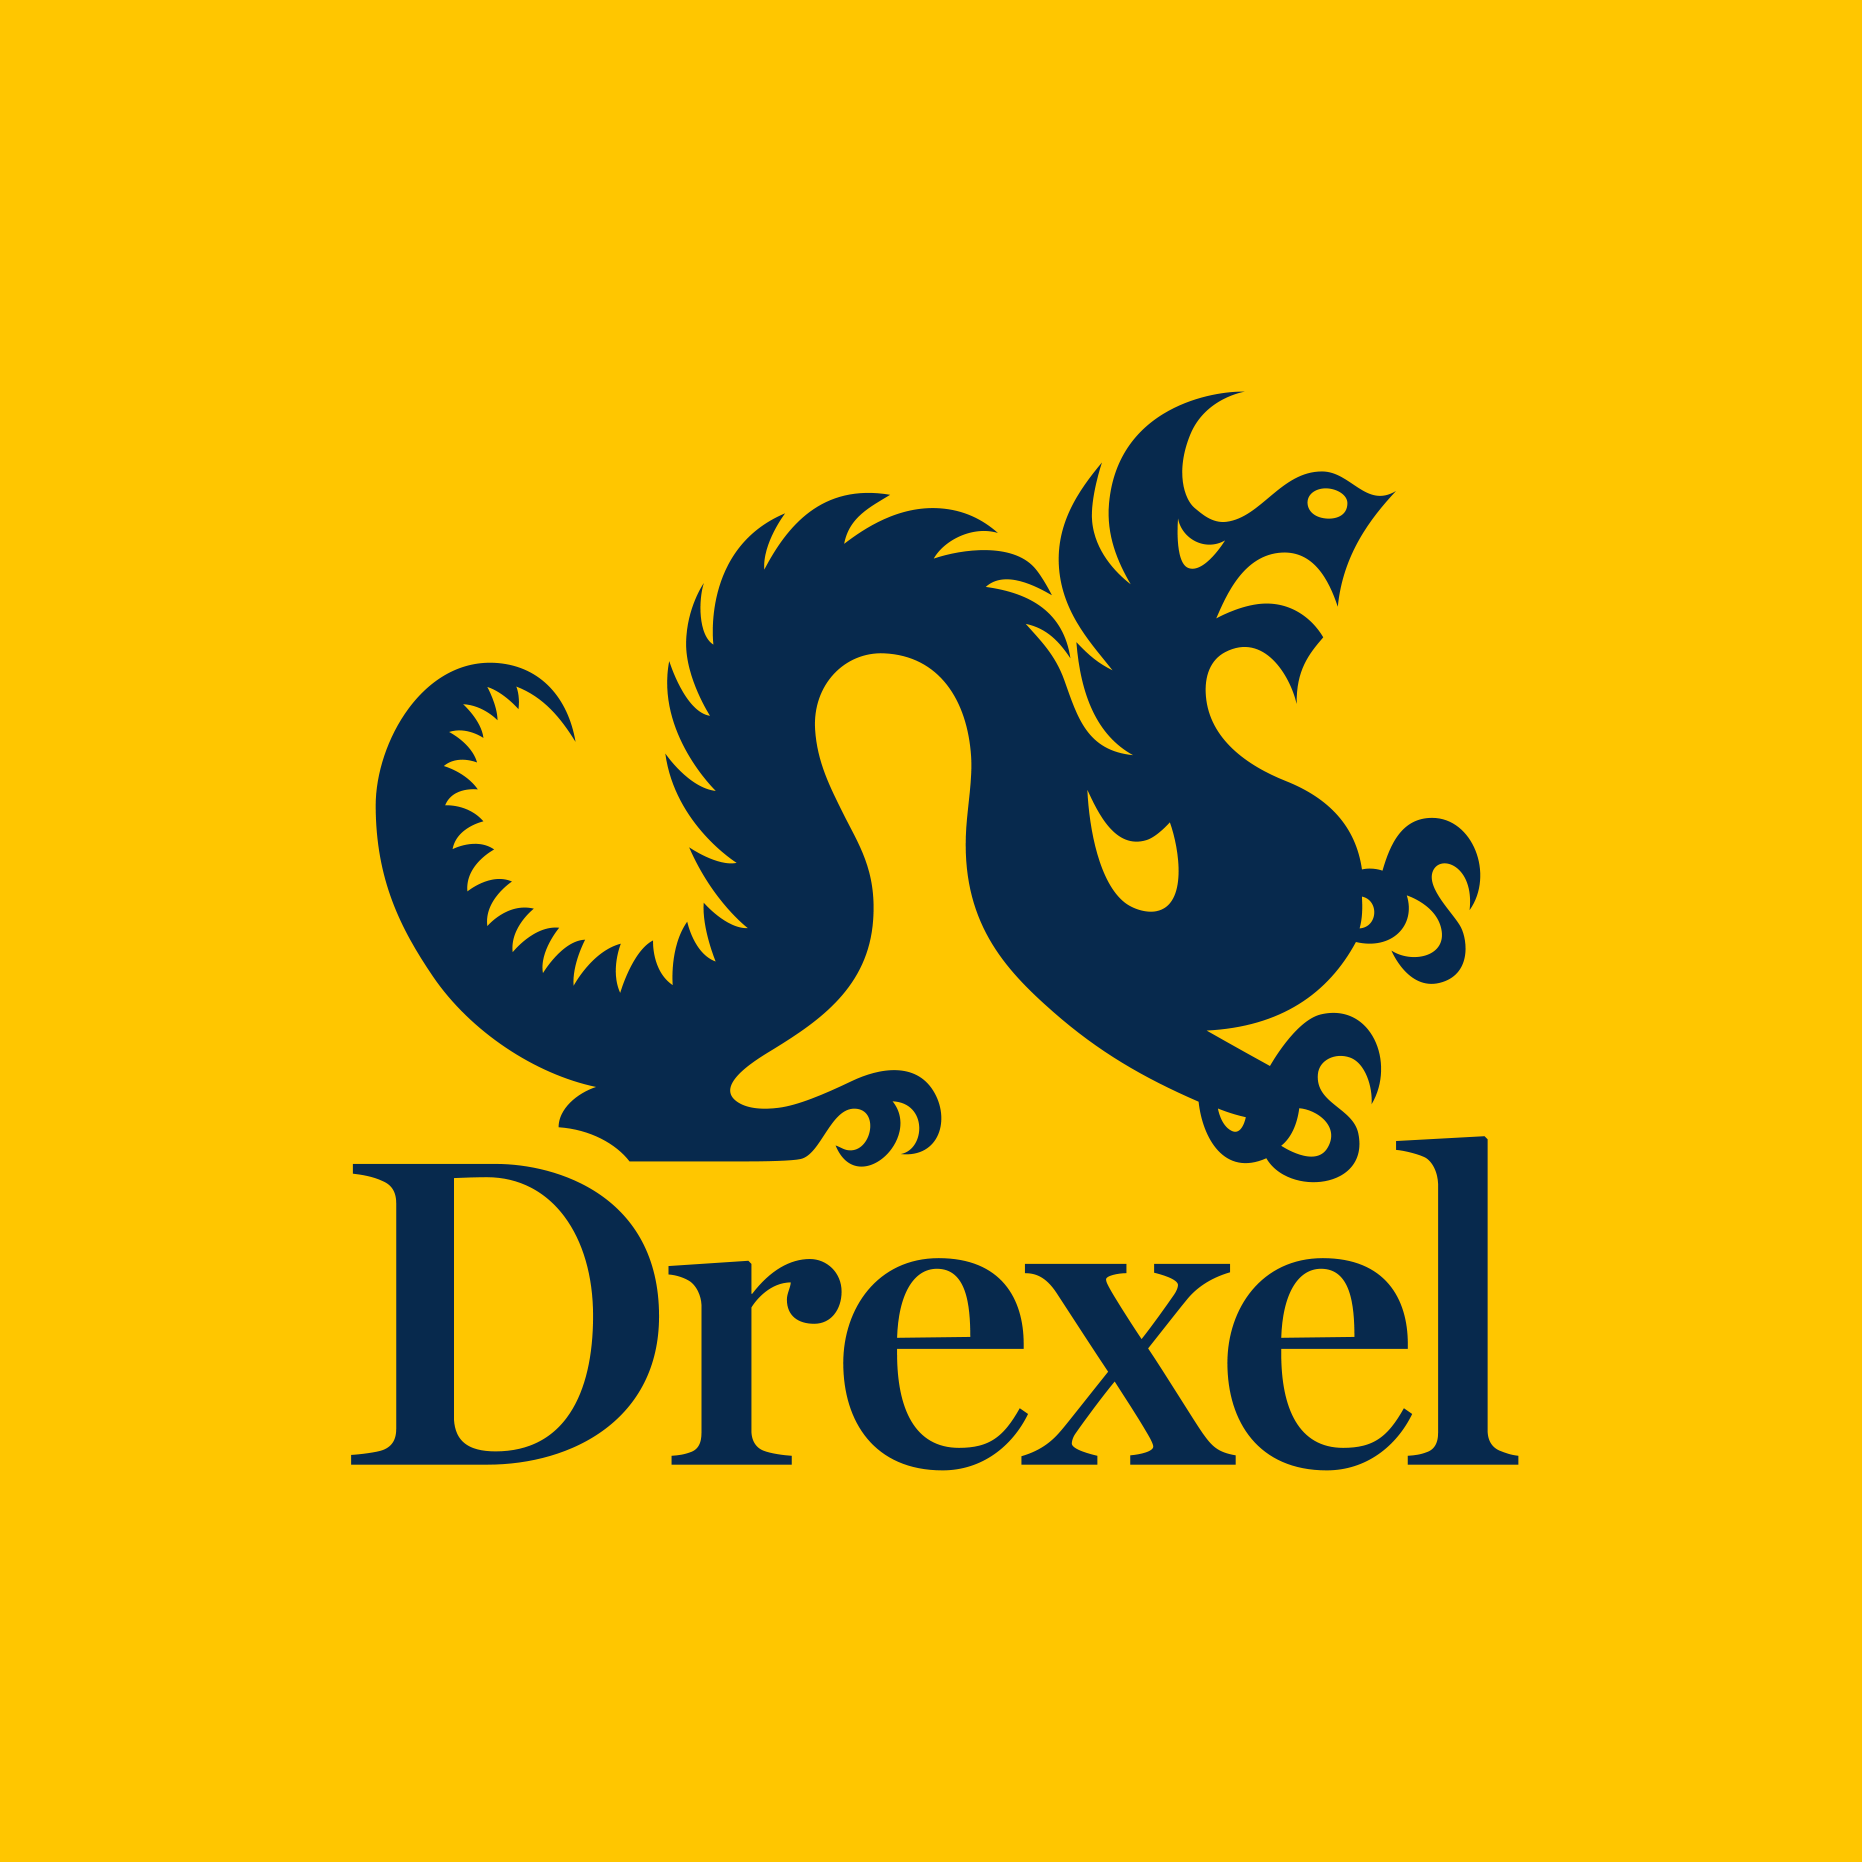 Drexel logo for twitter - yellow background